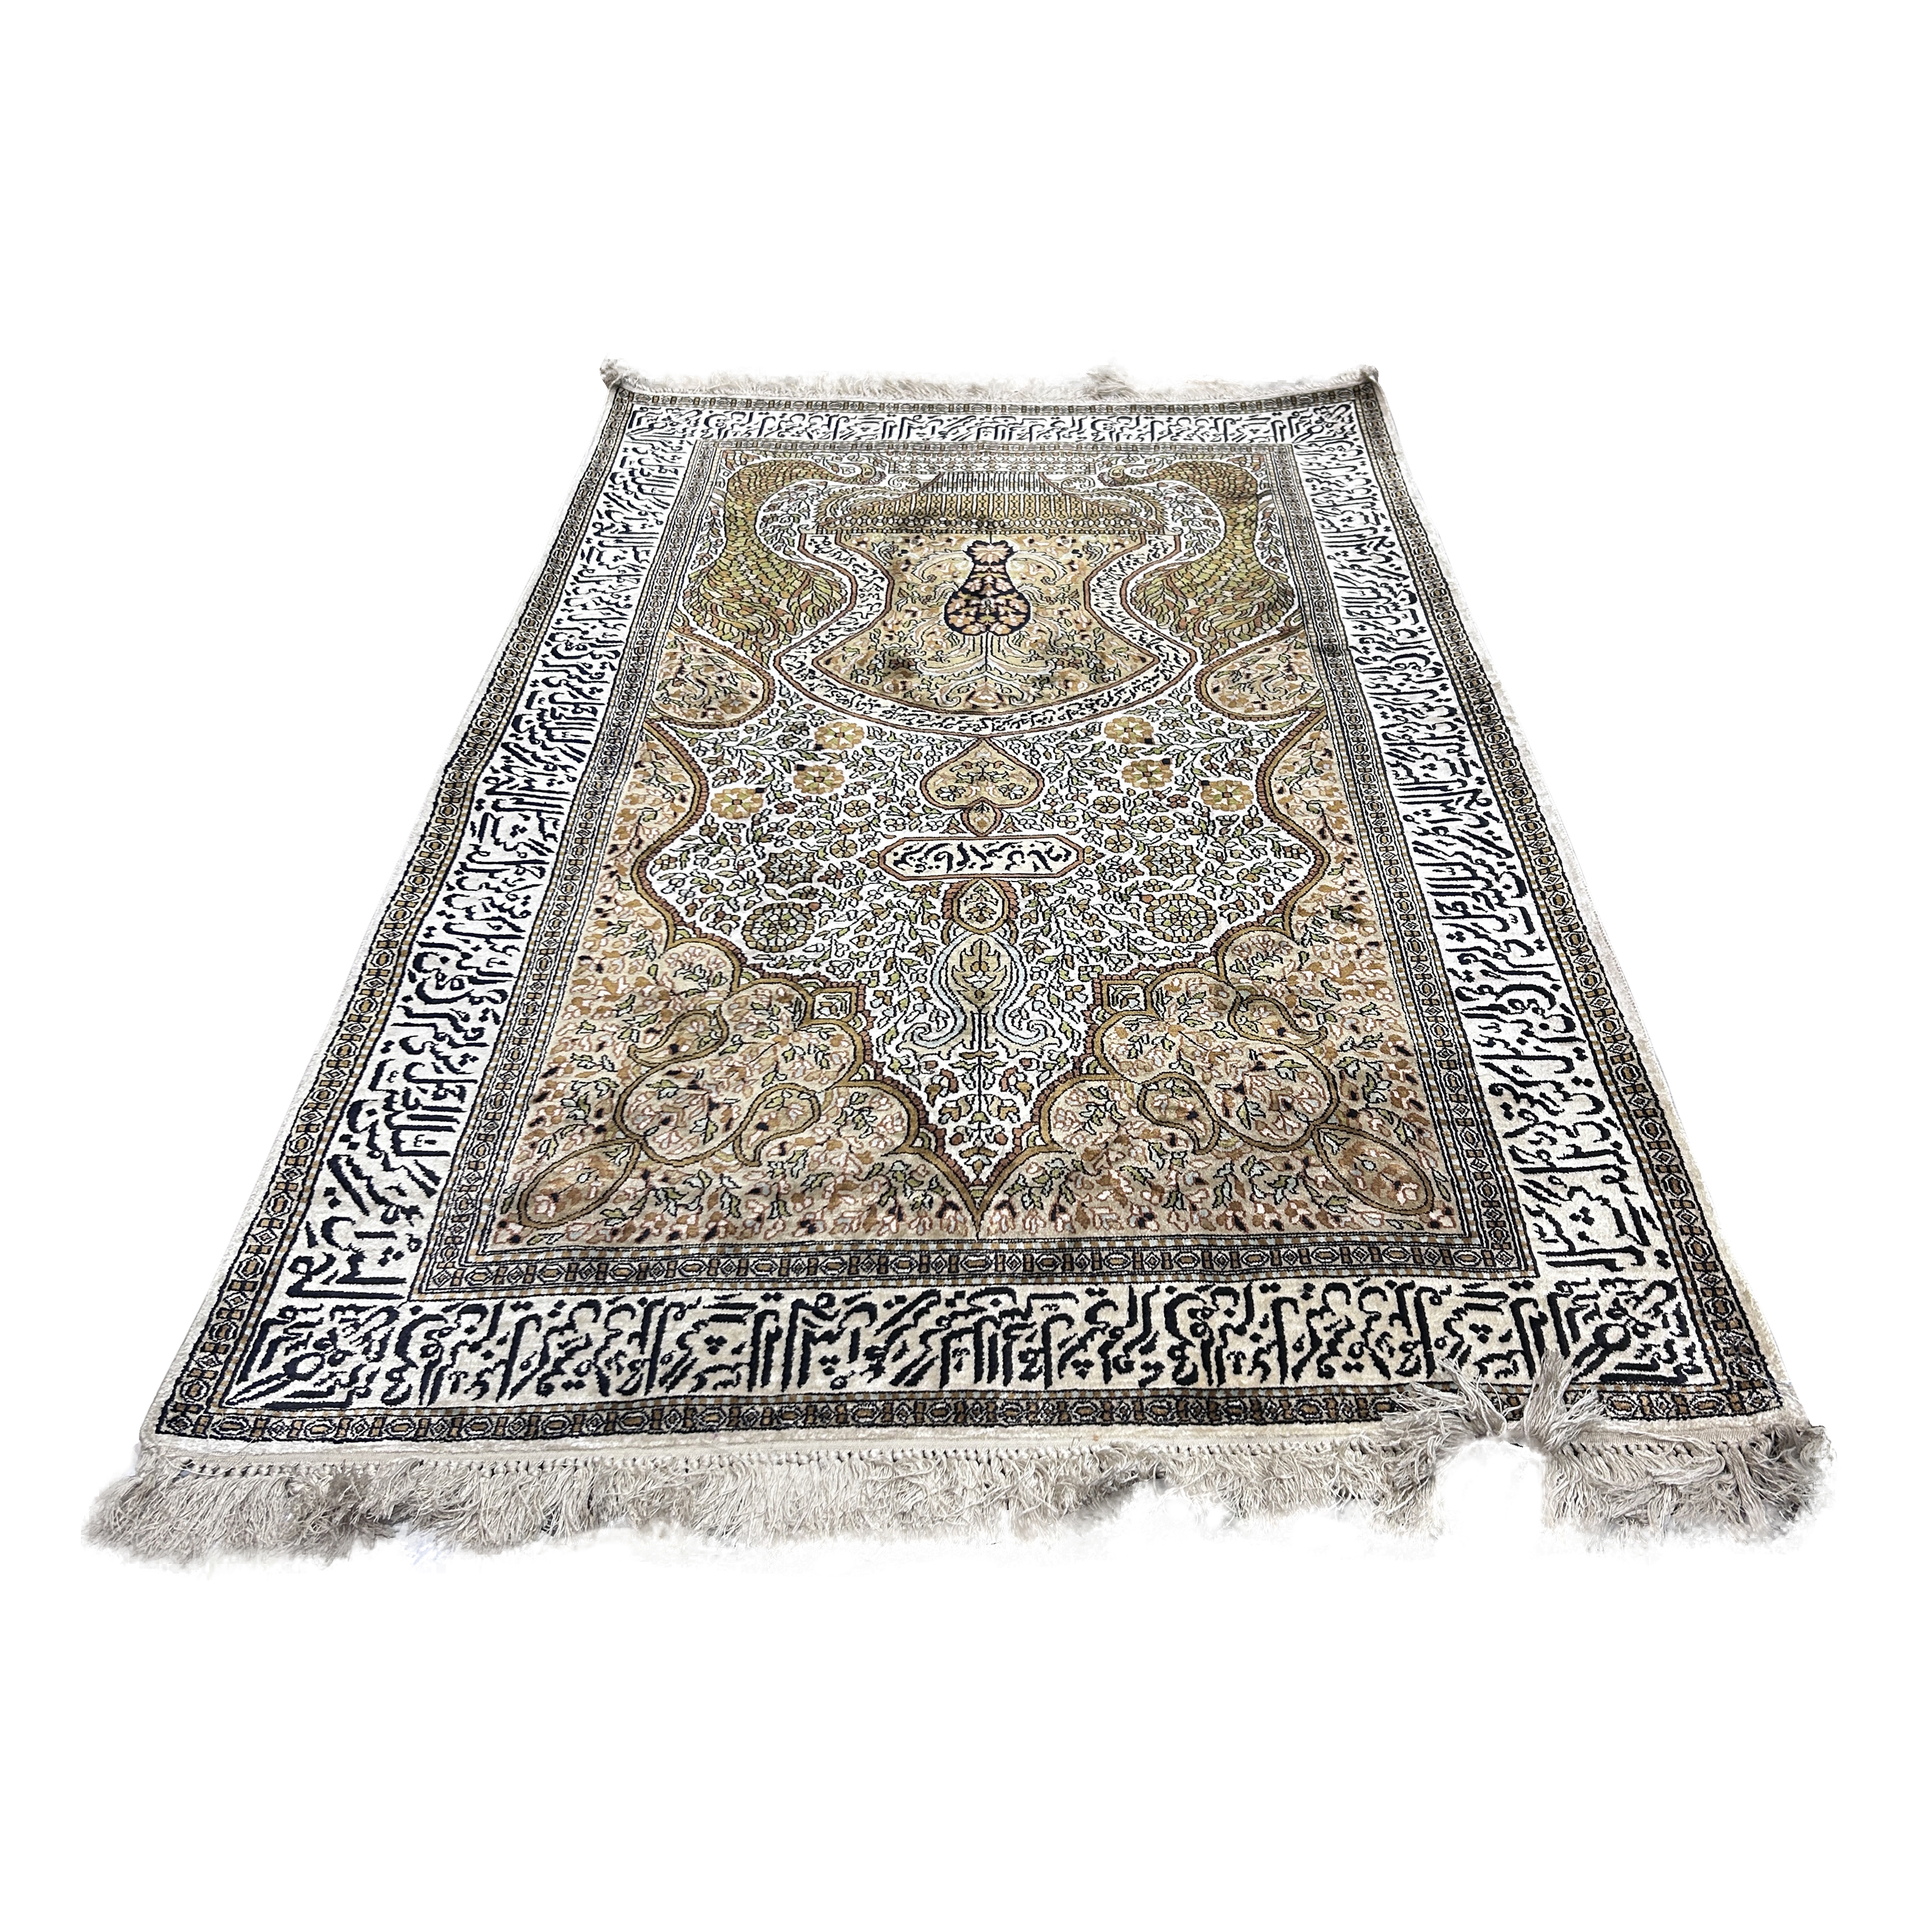 A PERSIAN MAT A Persian mat, 2'6"